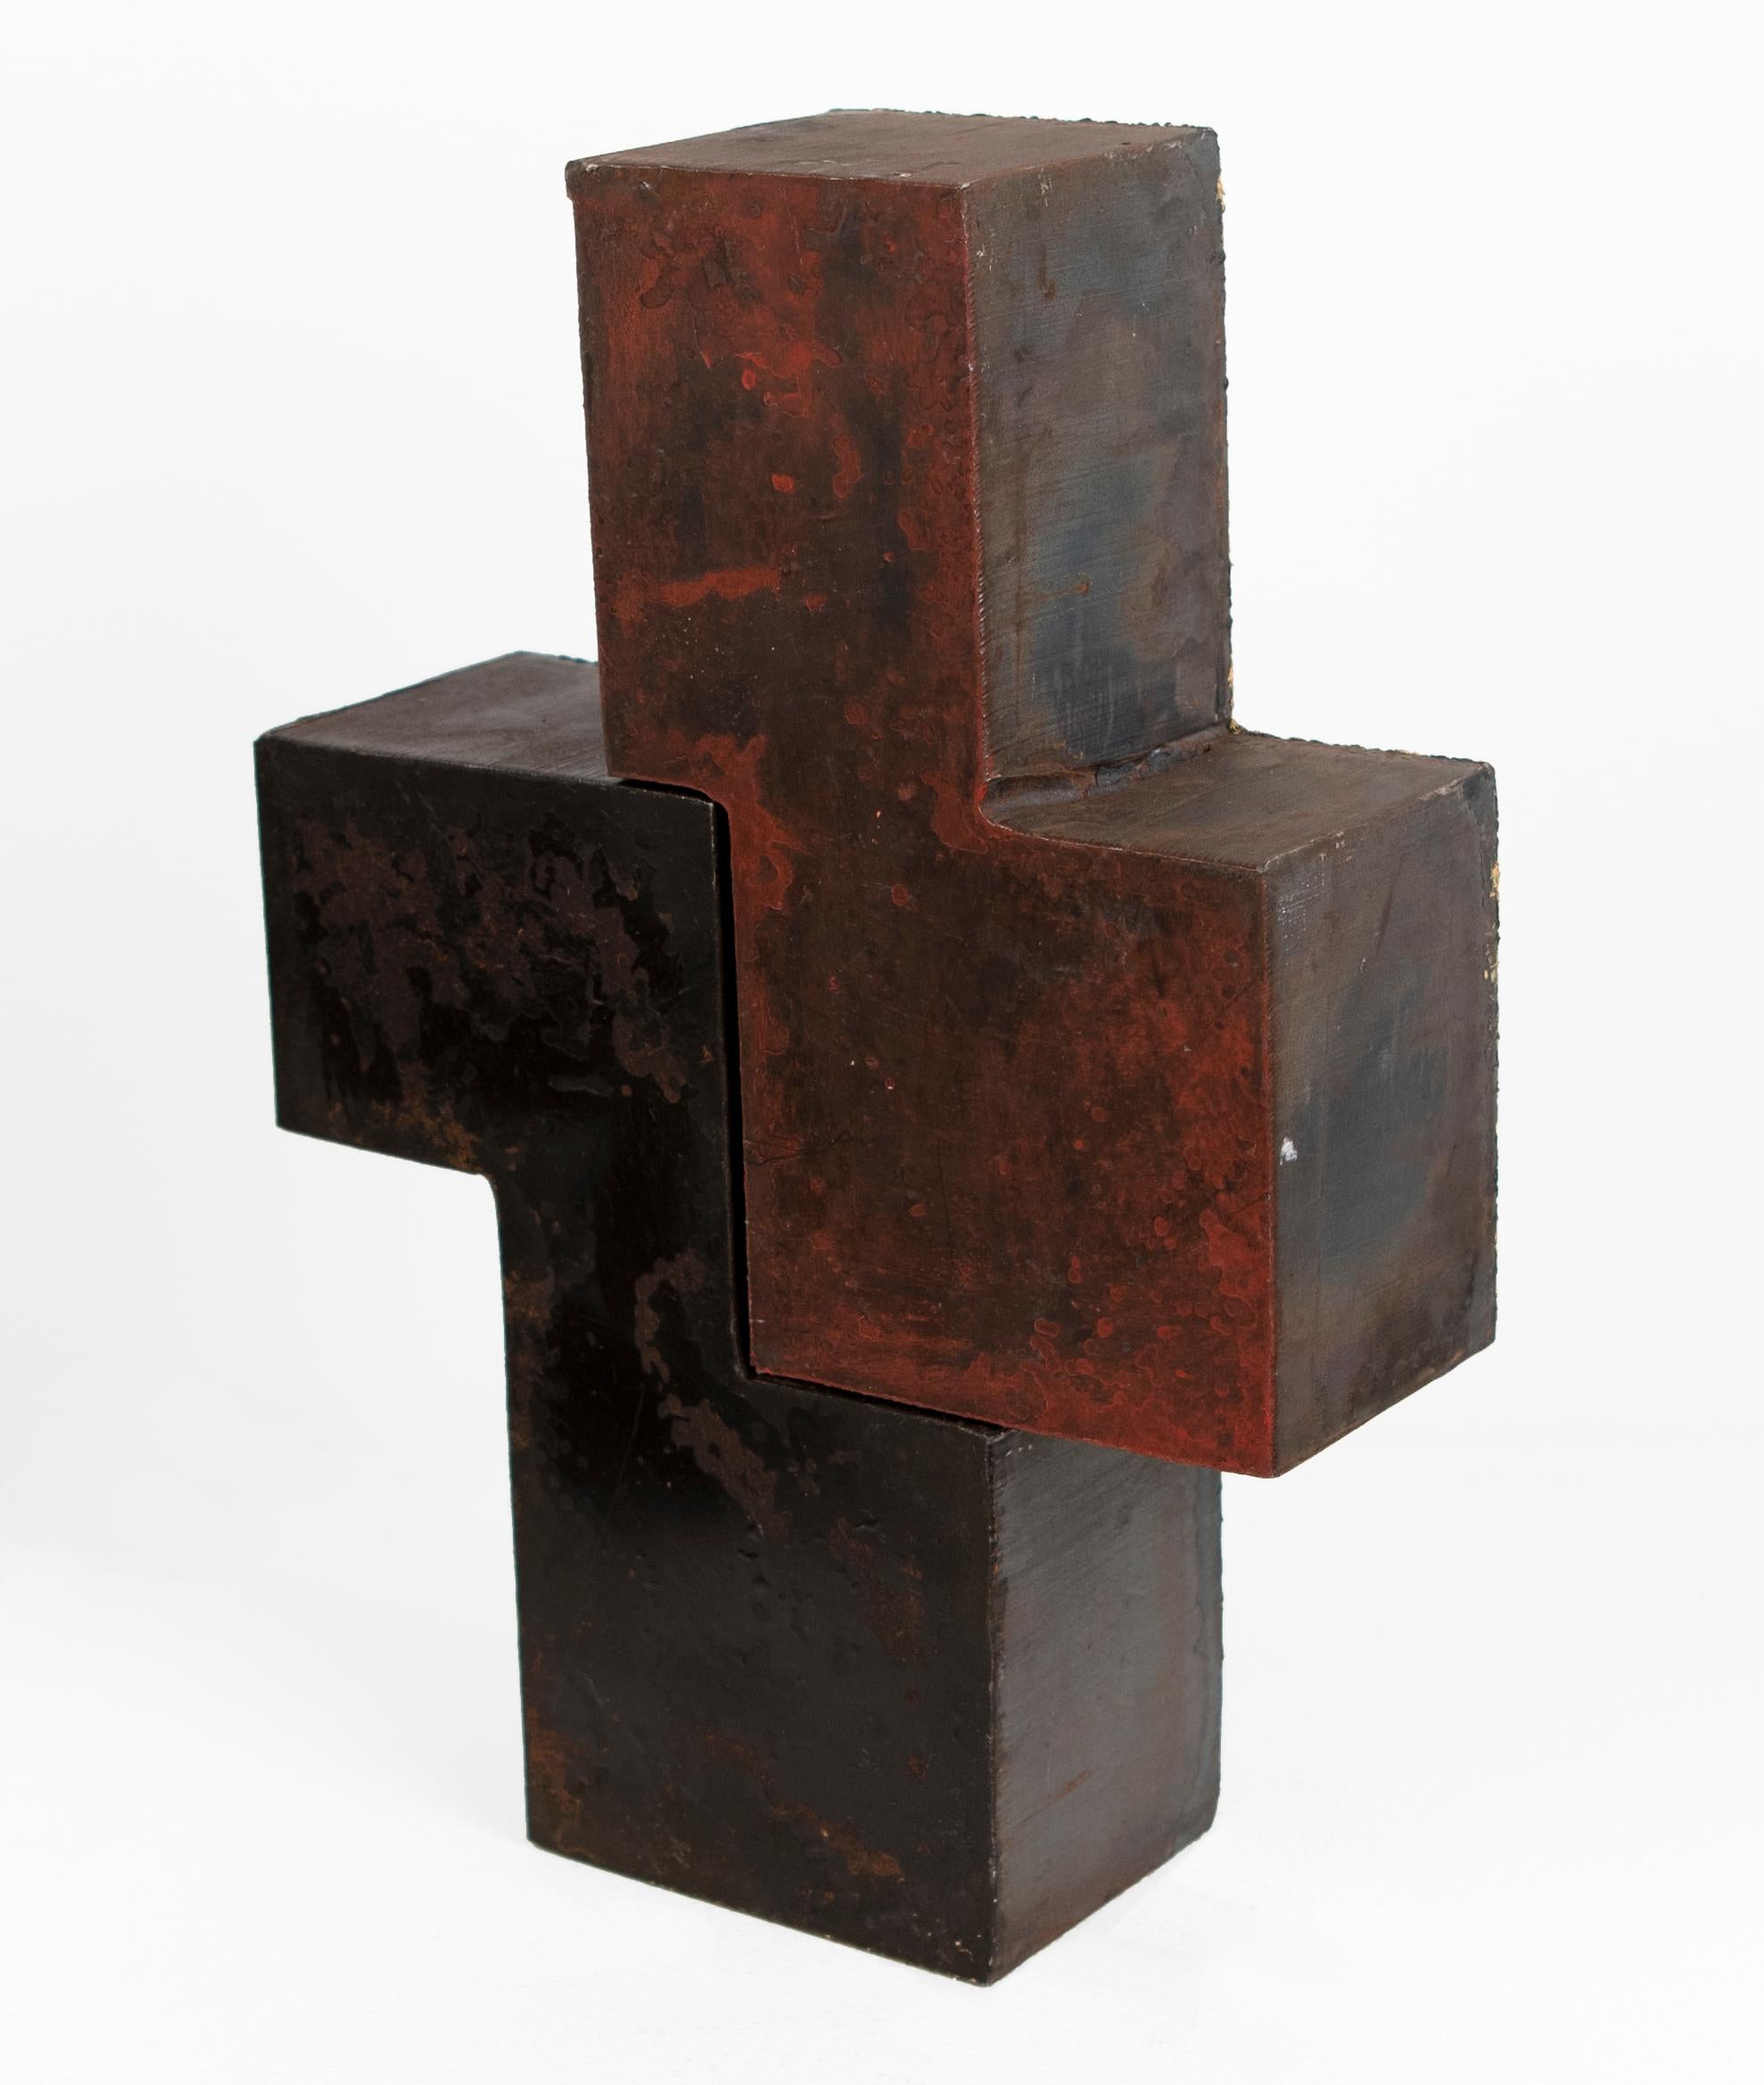 Jonathan Waters Figurative Sculpture - untitled sculpture (4)